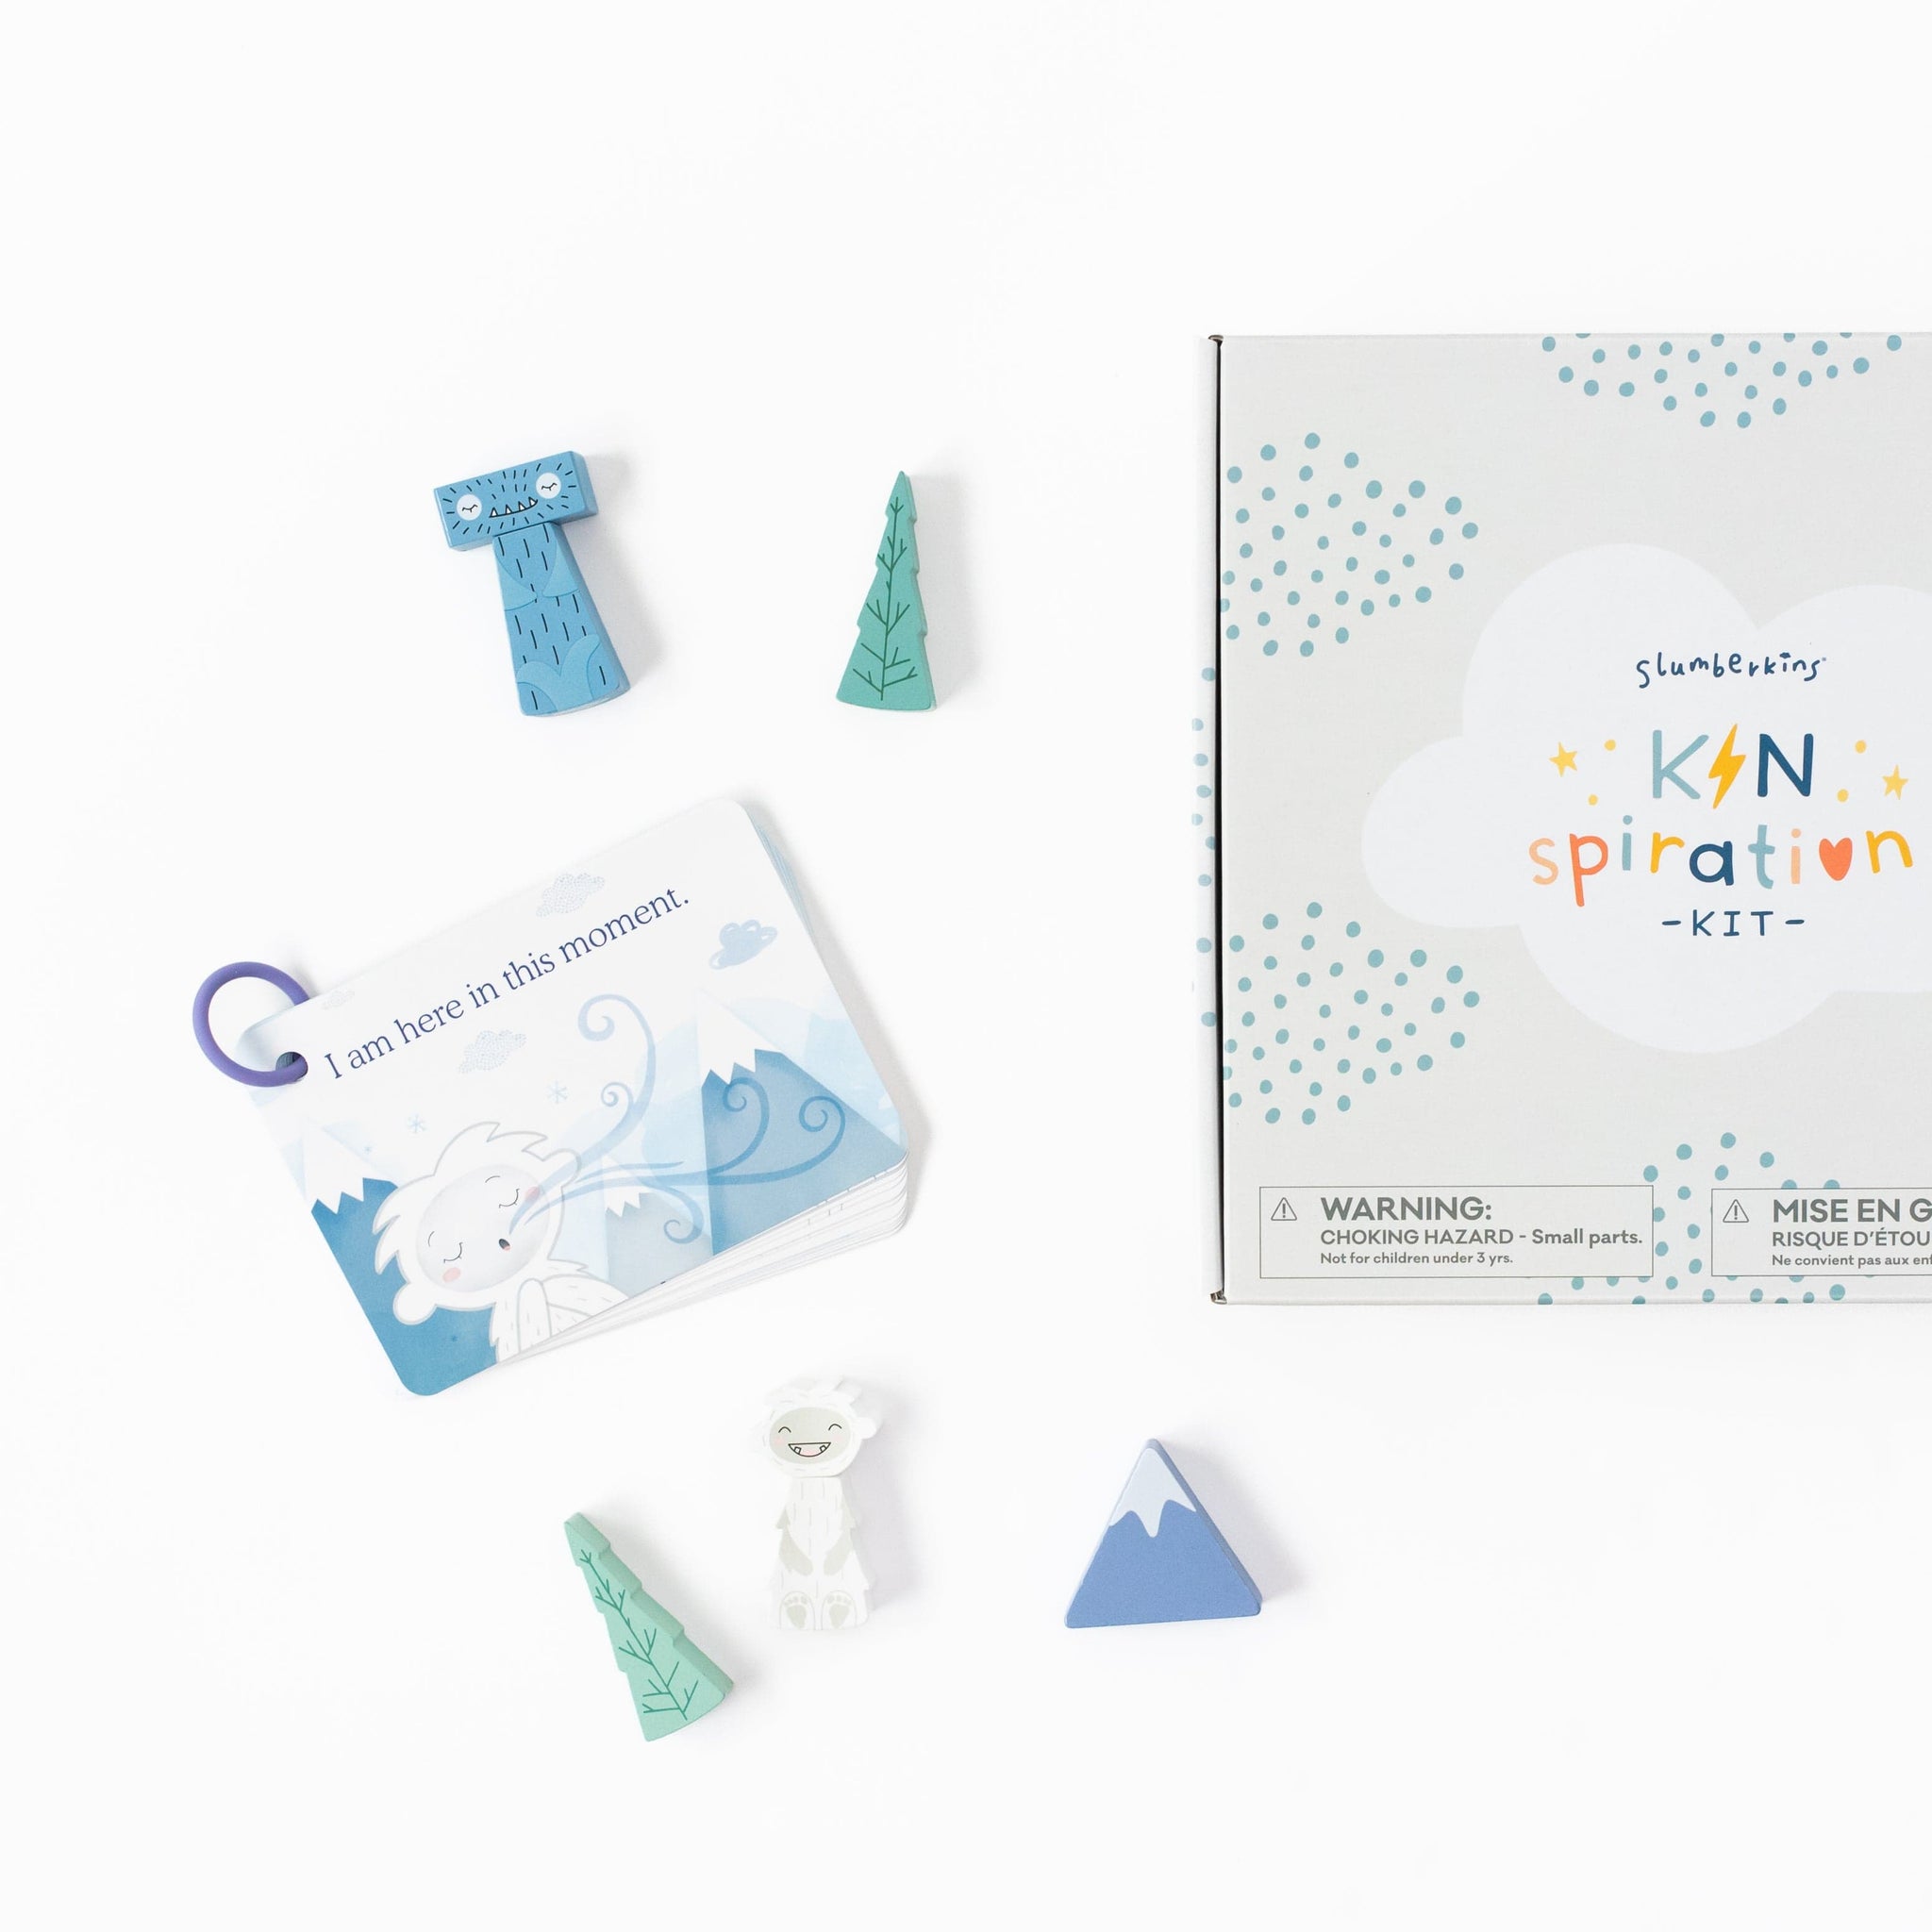 Kinspiration Kit: Mindful Play with Yeti